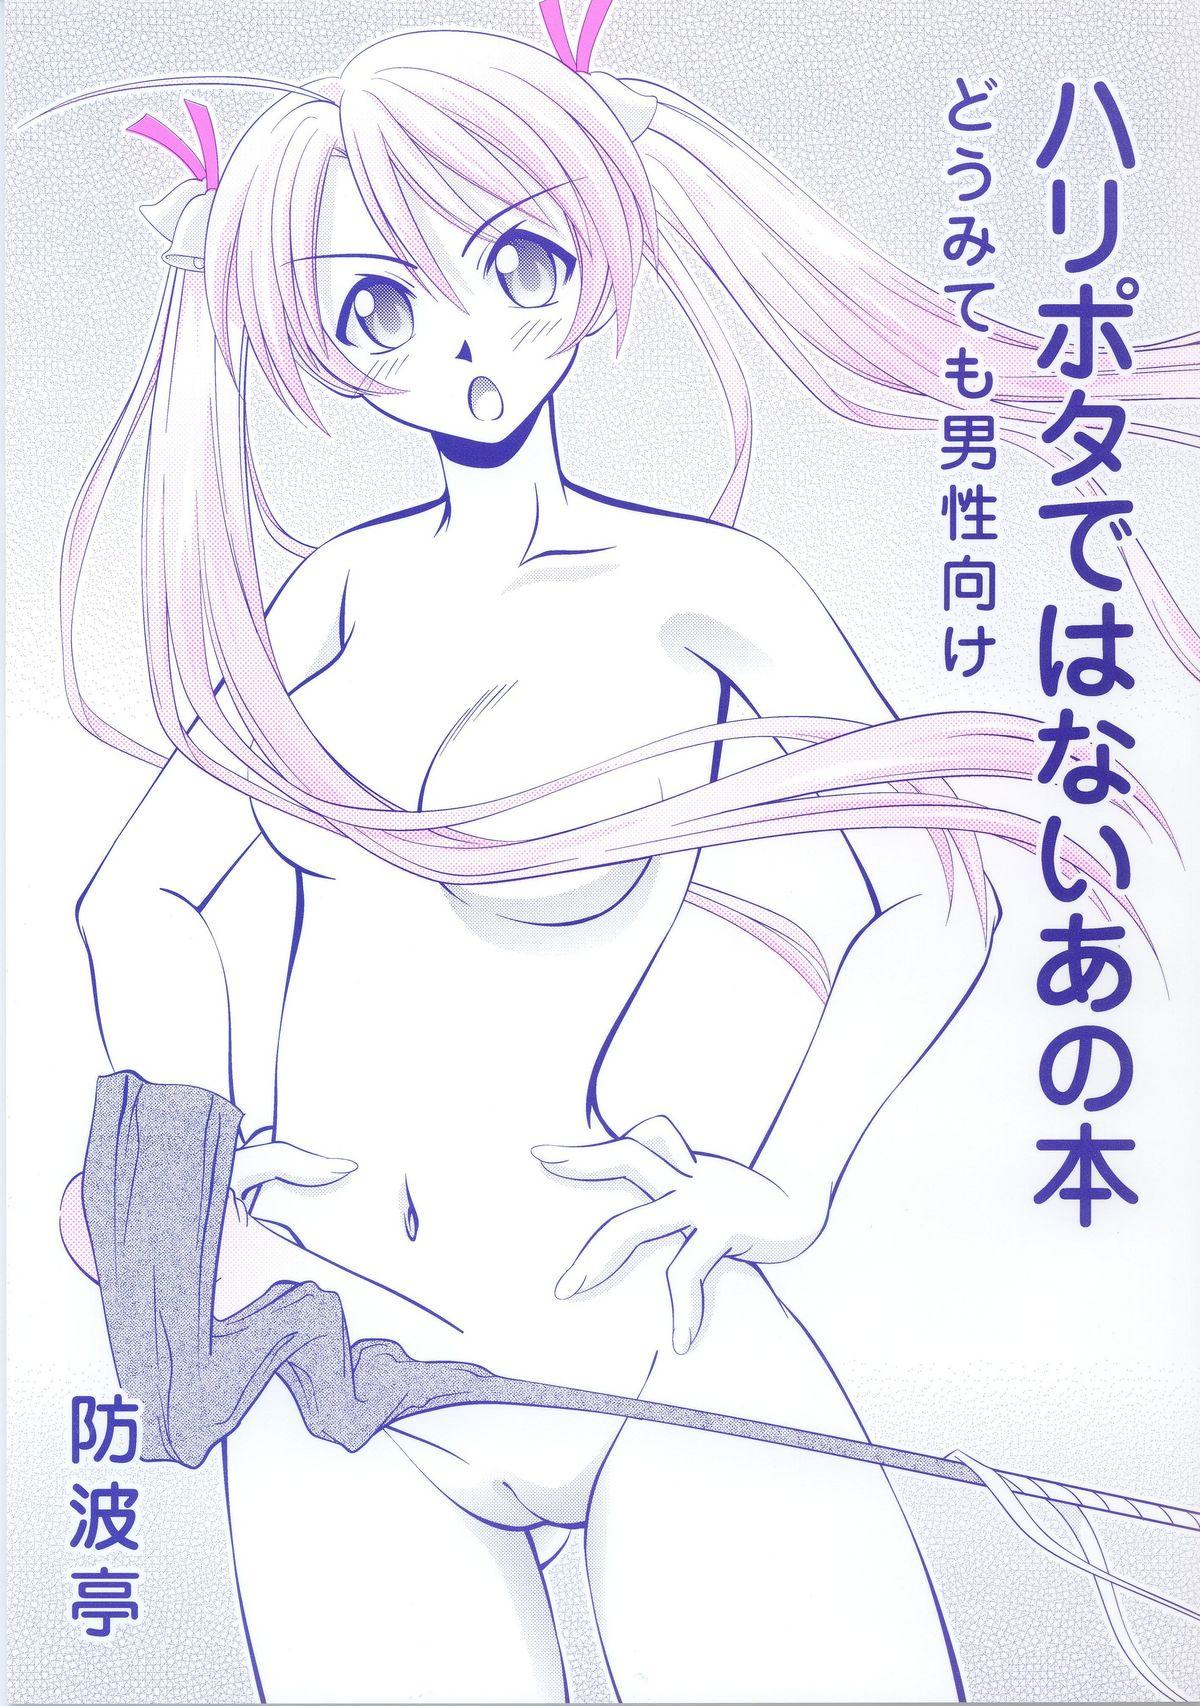 Strip Negima - Not Harry Potter - Mahou sensei negima Publico - Picture 1